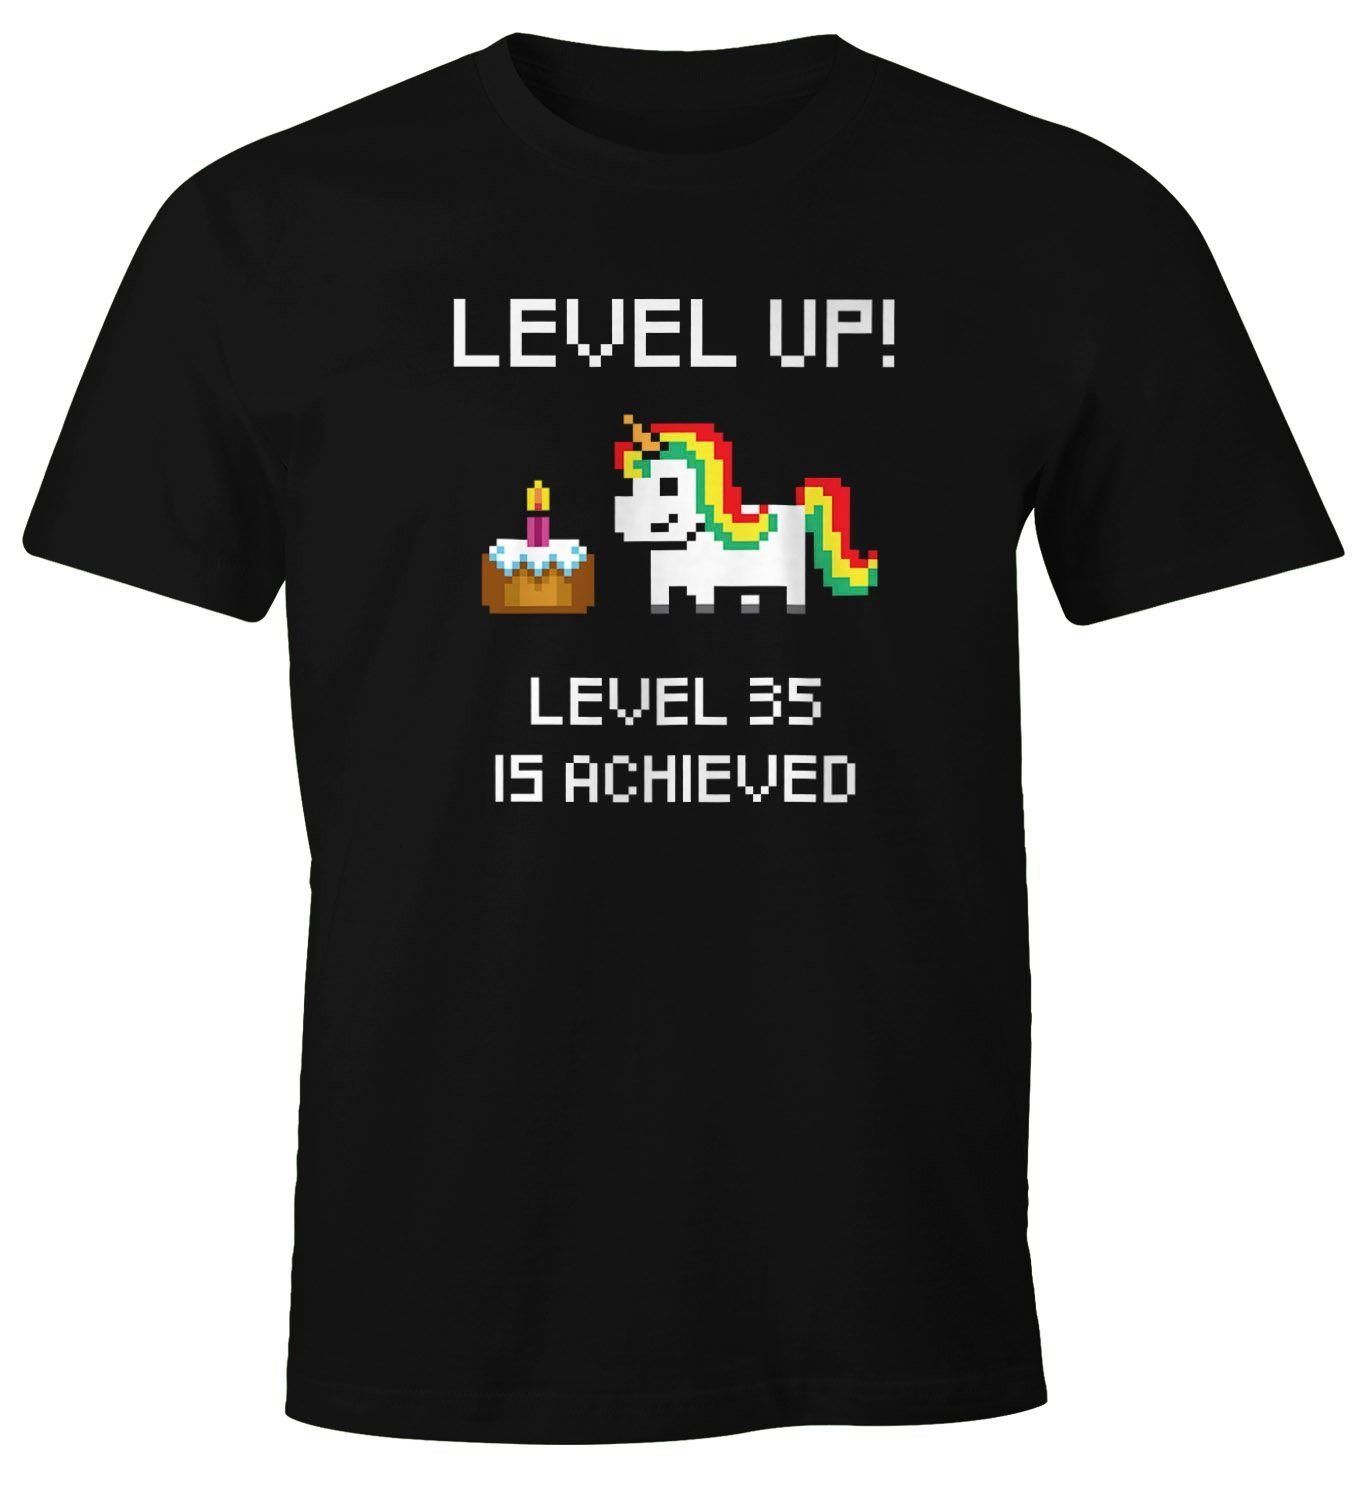 MoonWorks Print-Shirt Herren T-Shirt Geburtstag Level Up Pixel-Einhorn Torte Retro Gamer Pixelgrafik Geschenk Arcade Fun-Shirt Moonworks® mit Print 35 schwarz